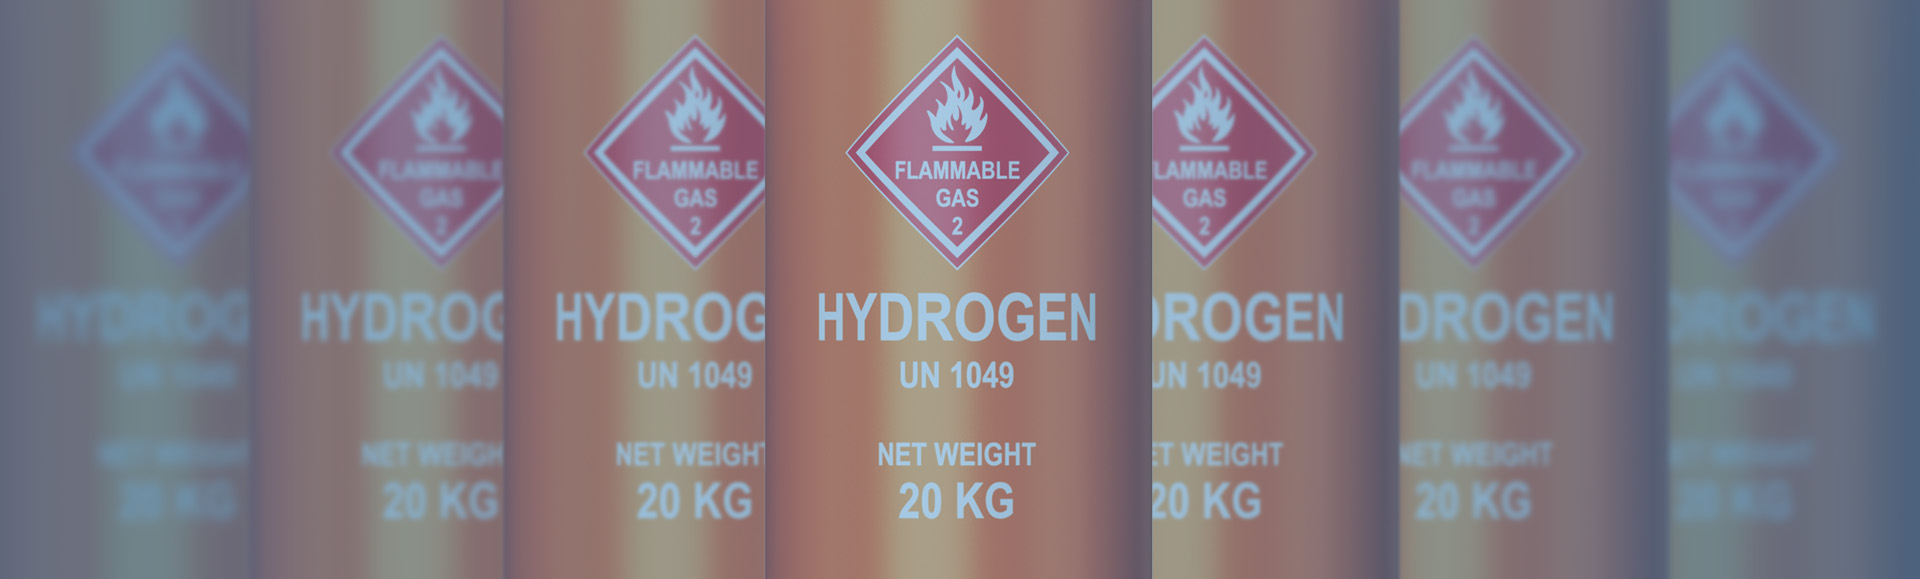 IMG - Buy Hydrogen Gas Seychelles